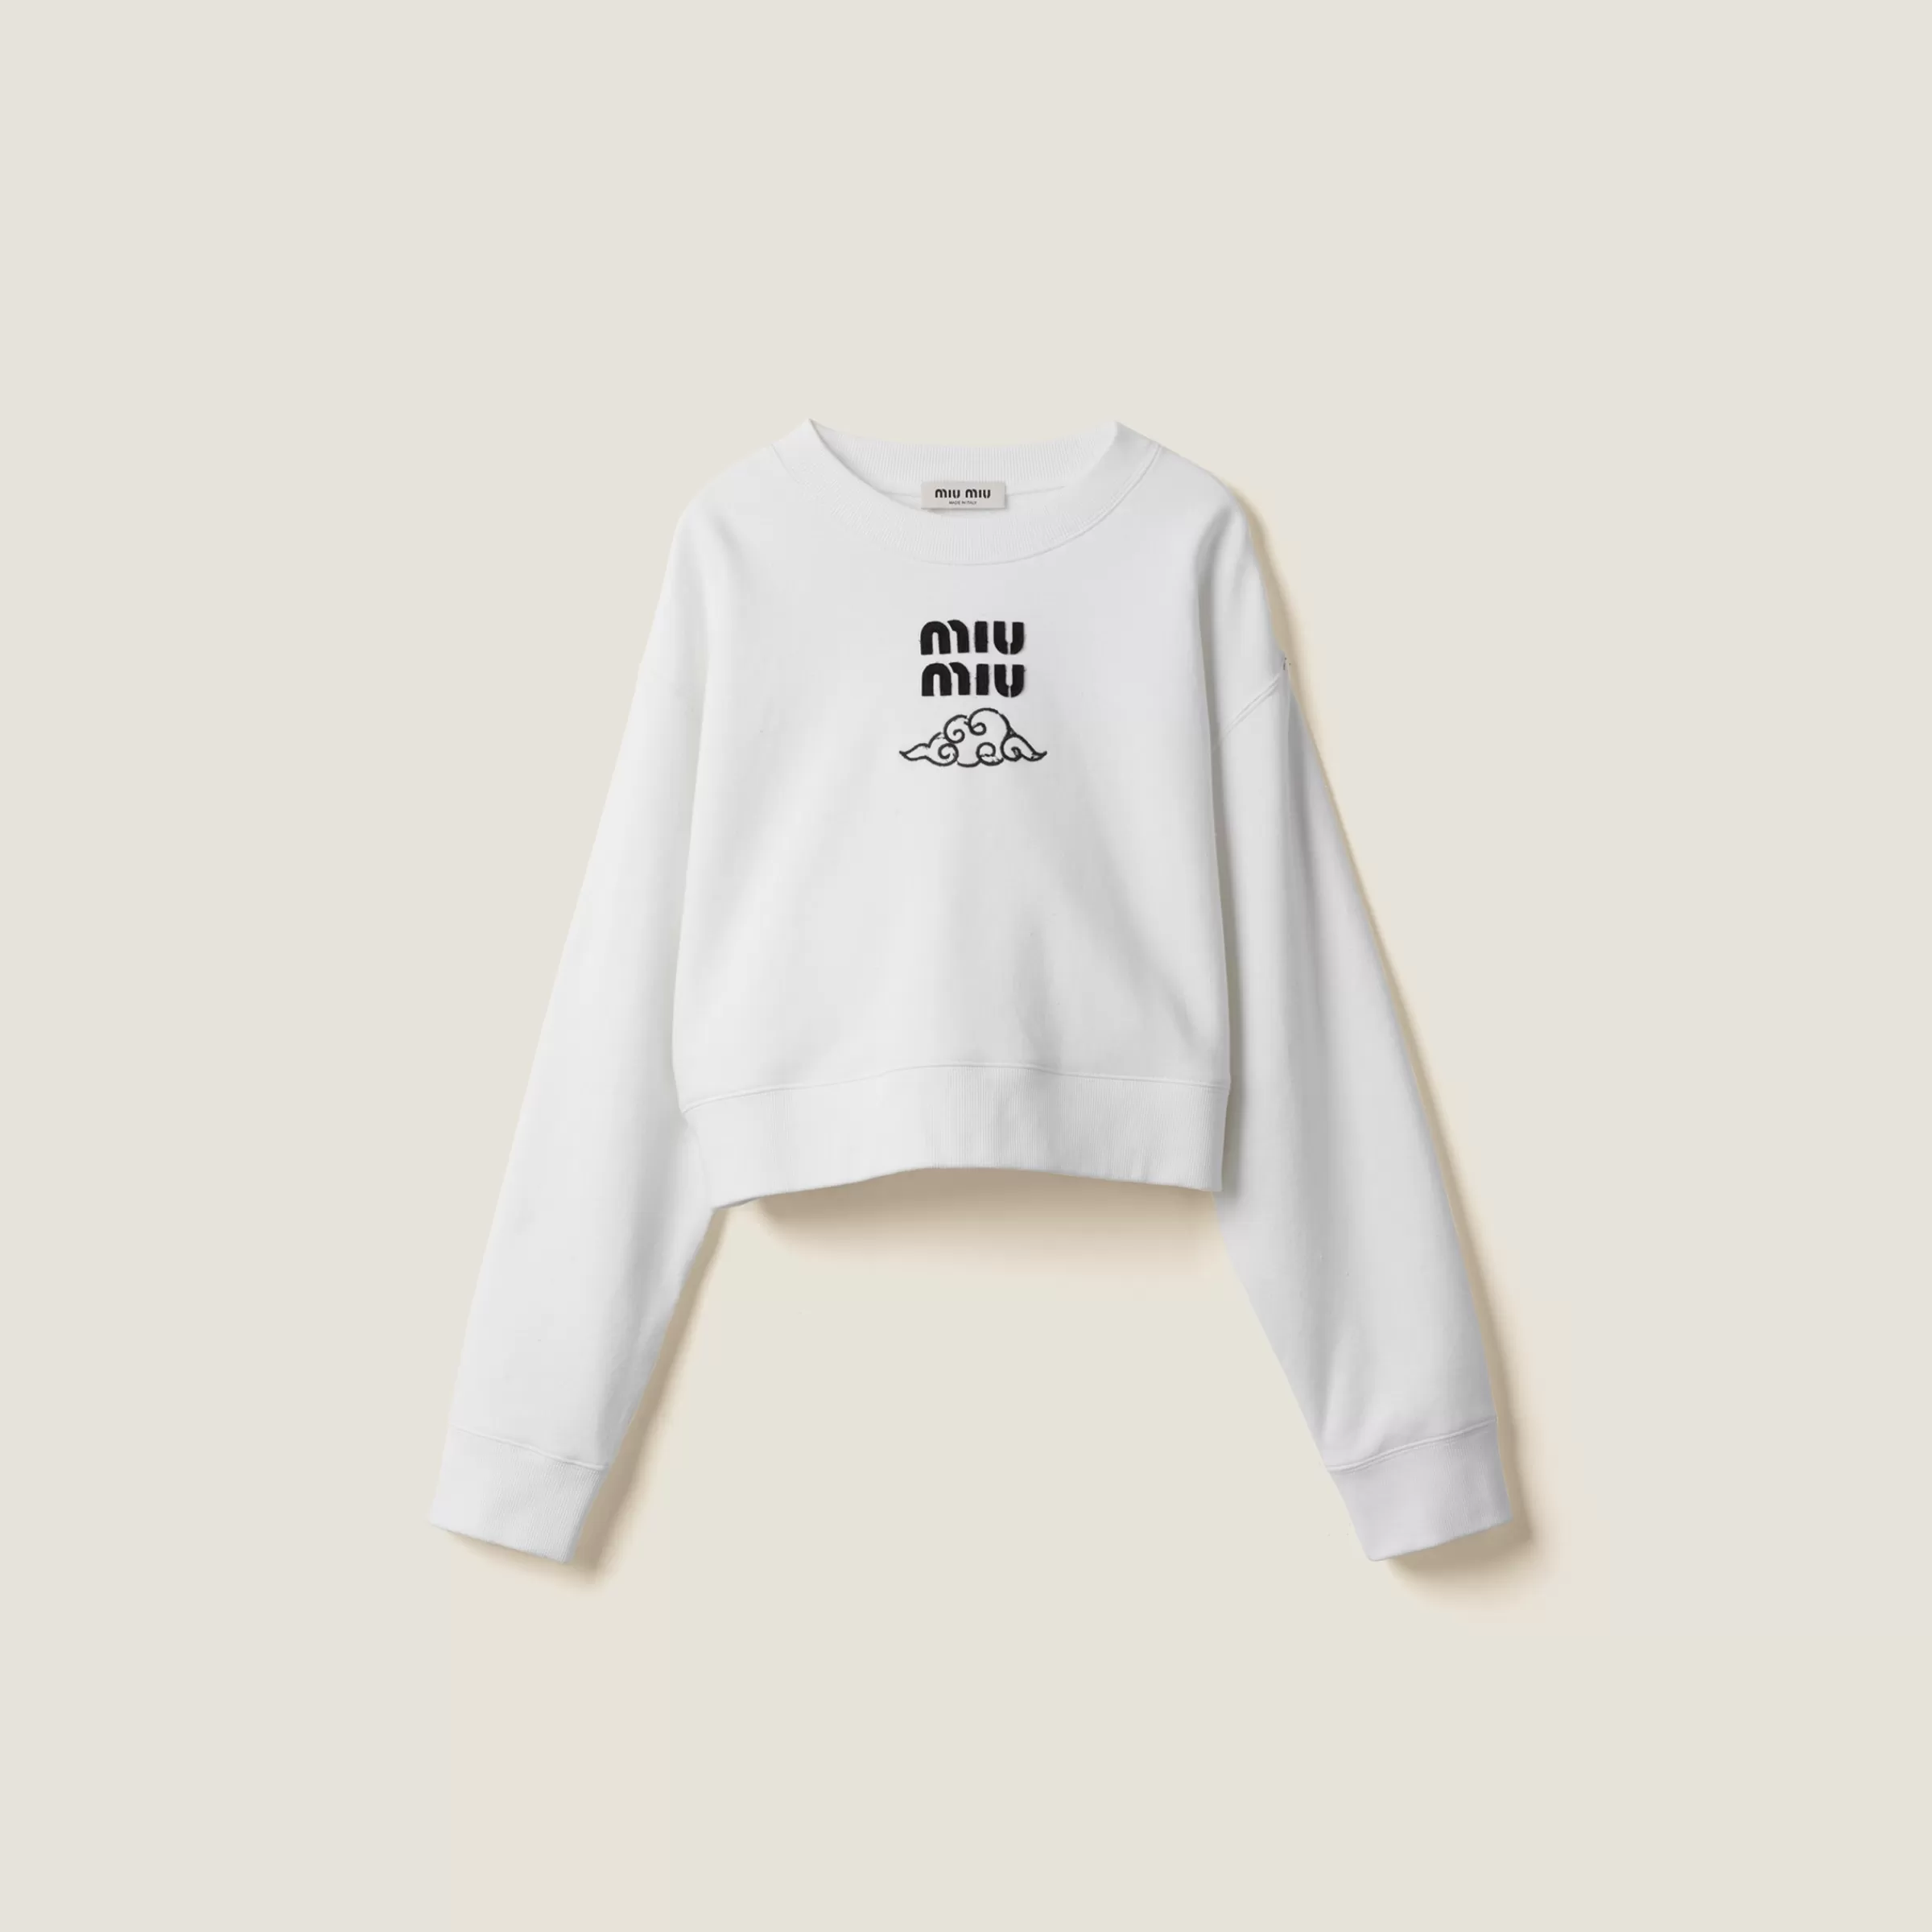 Miu Miu Cotton Fleece Sweatshirt |